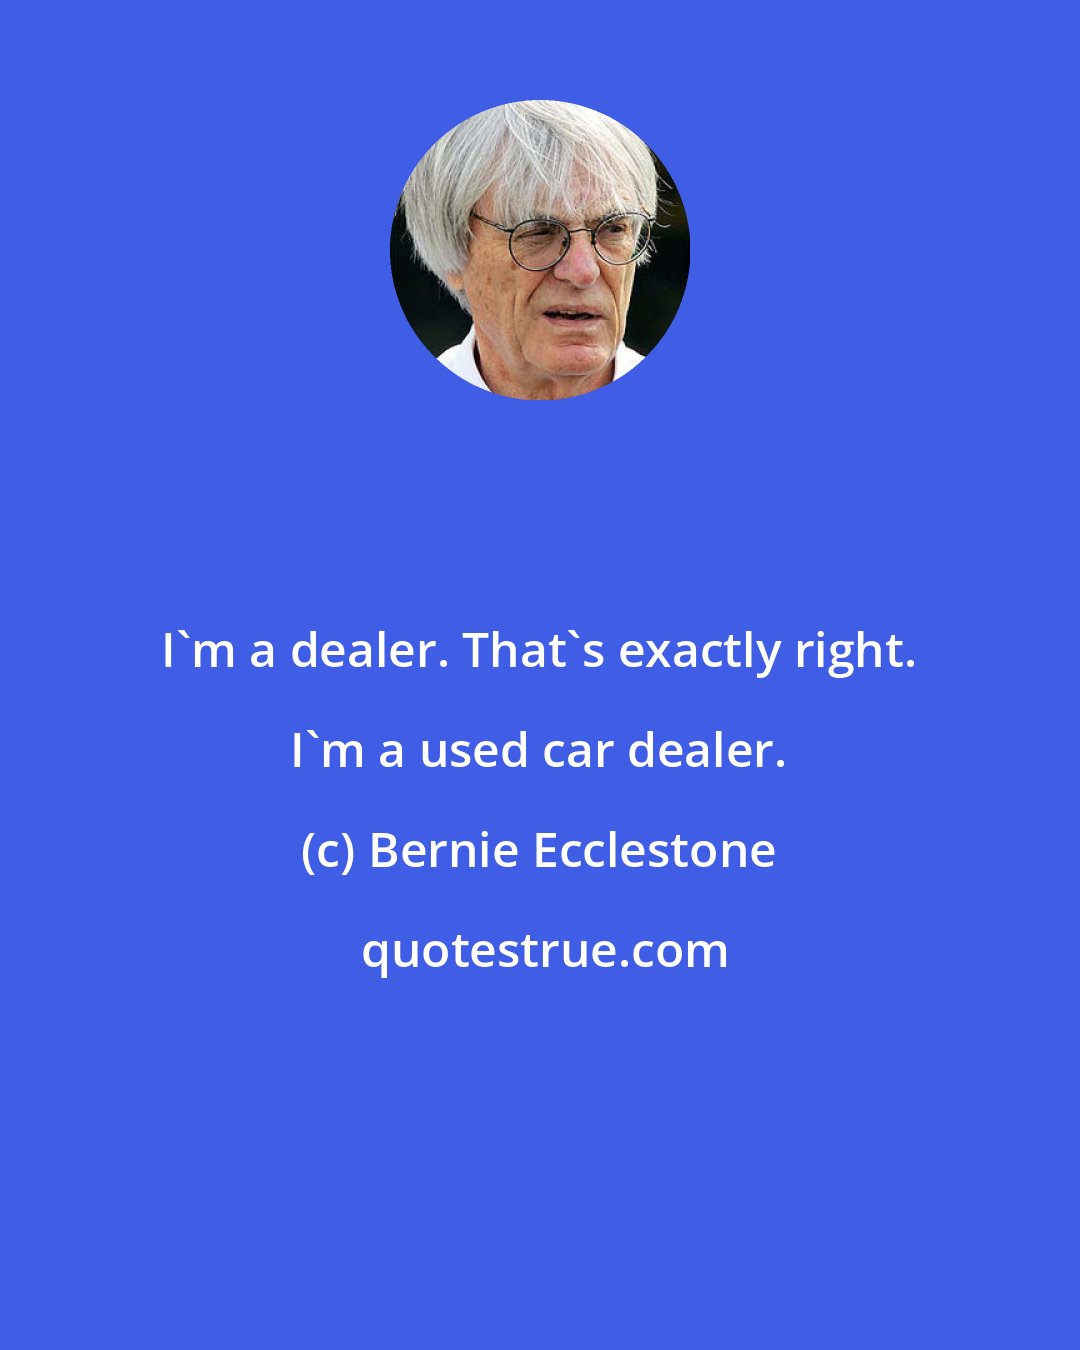 Bernie Ecclestone: I'm a dealer. That's exactly right. I'm a used car dealer.